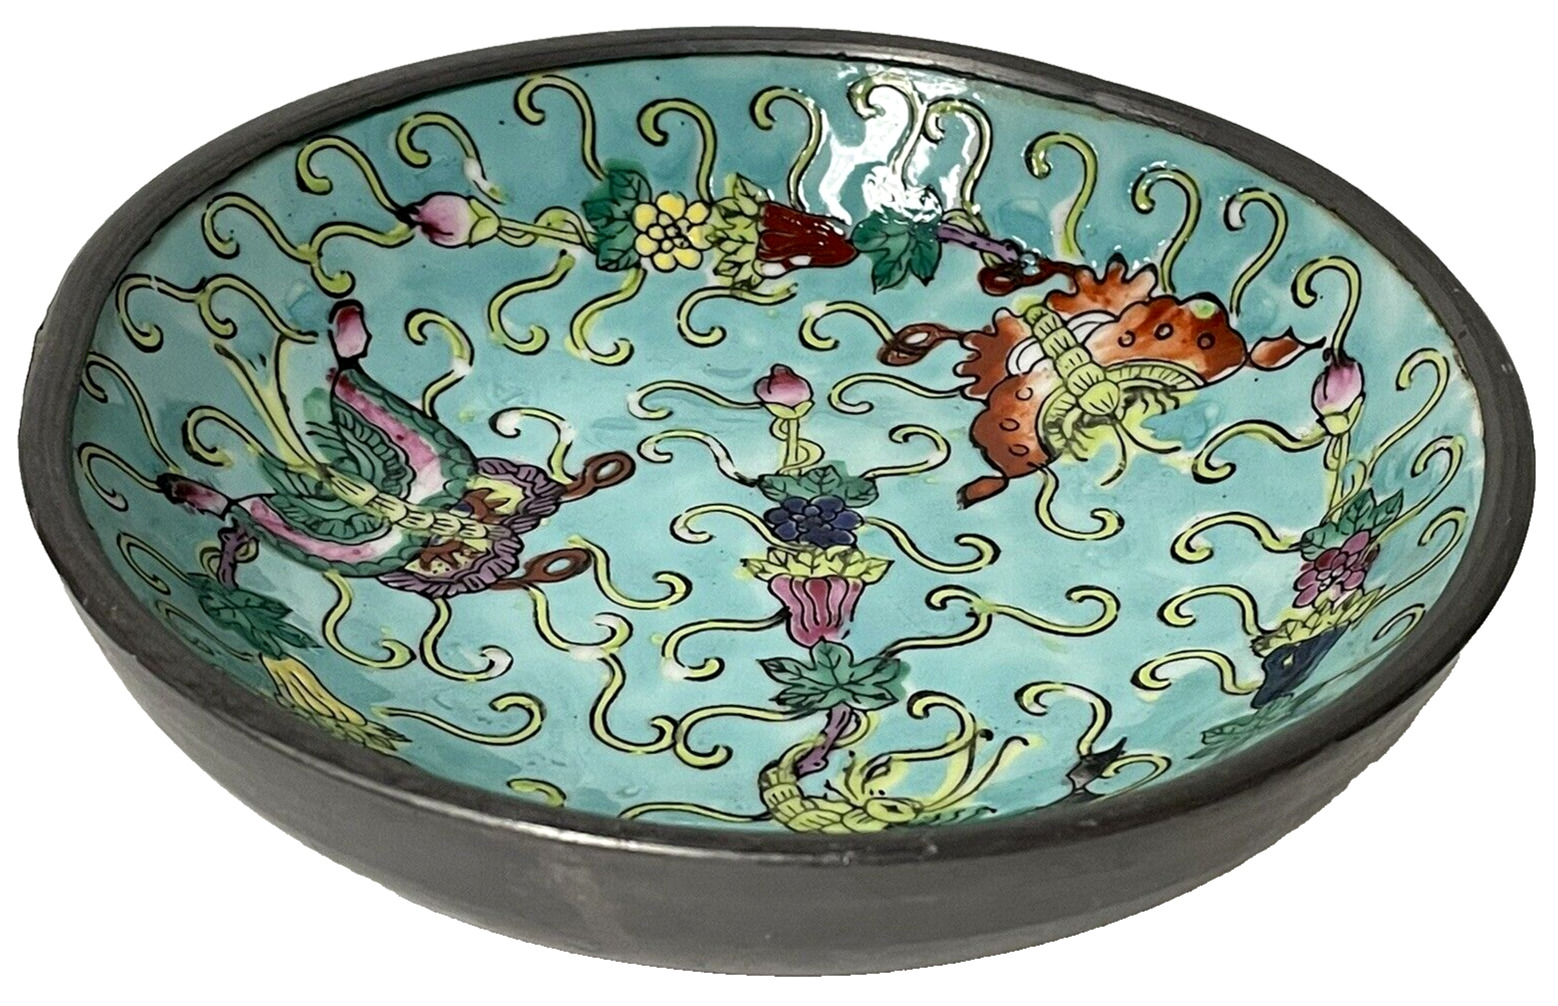 Vintage Japanese Cloisonné Enameled Metal Teal Floral Butterfly Asian Art Bowl